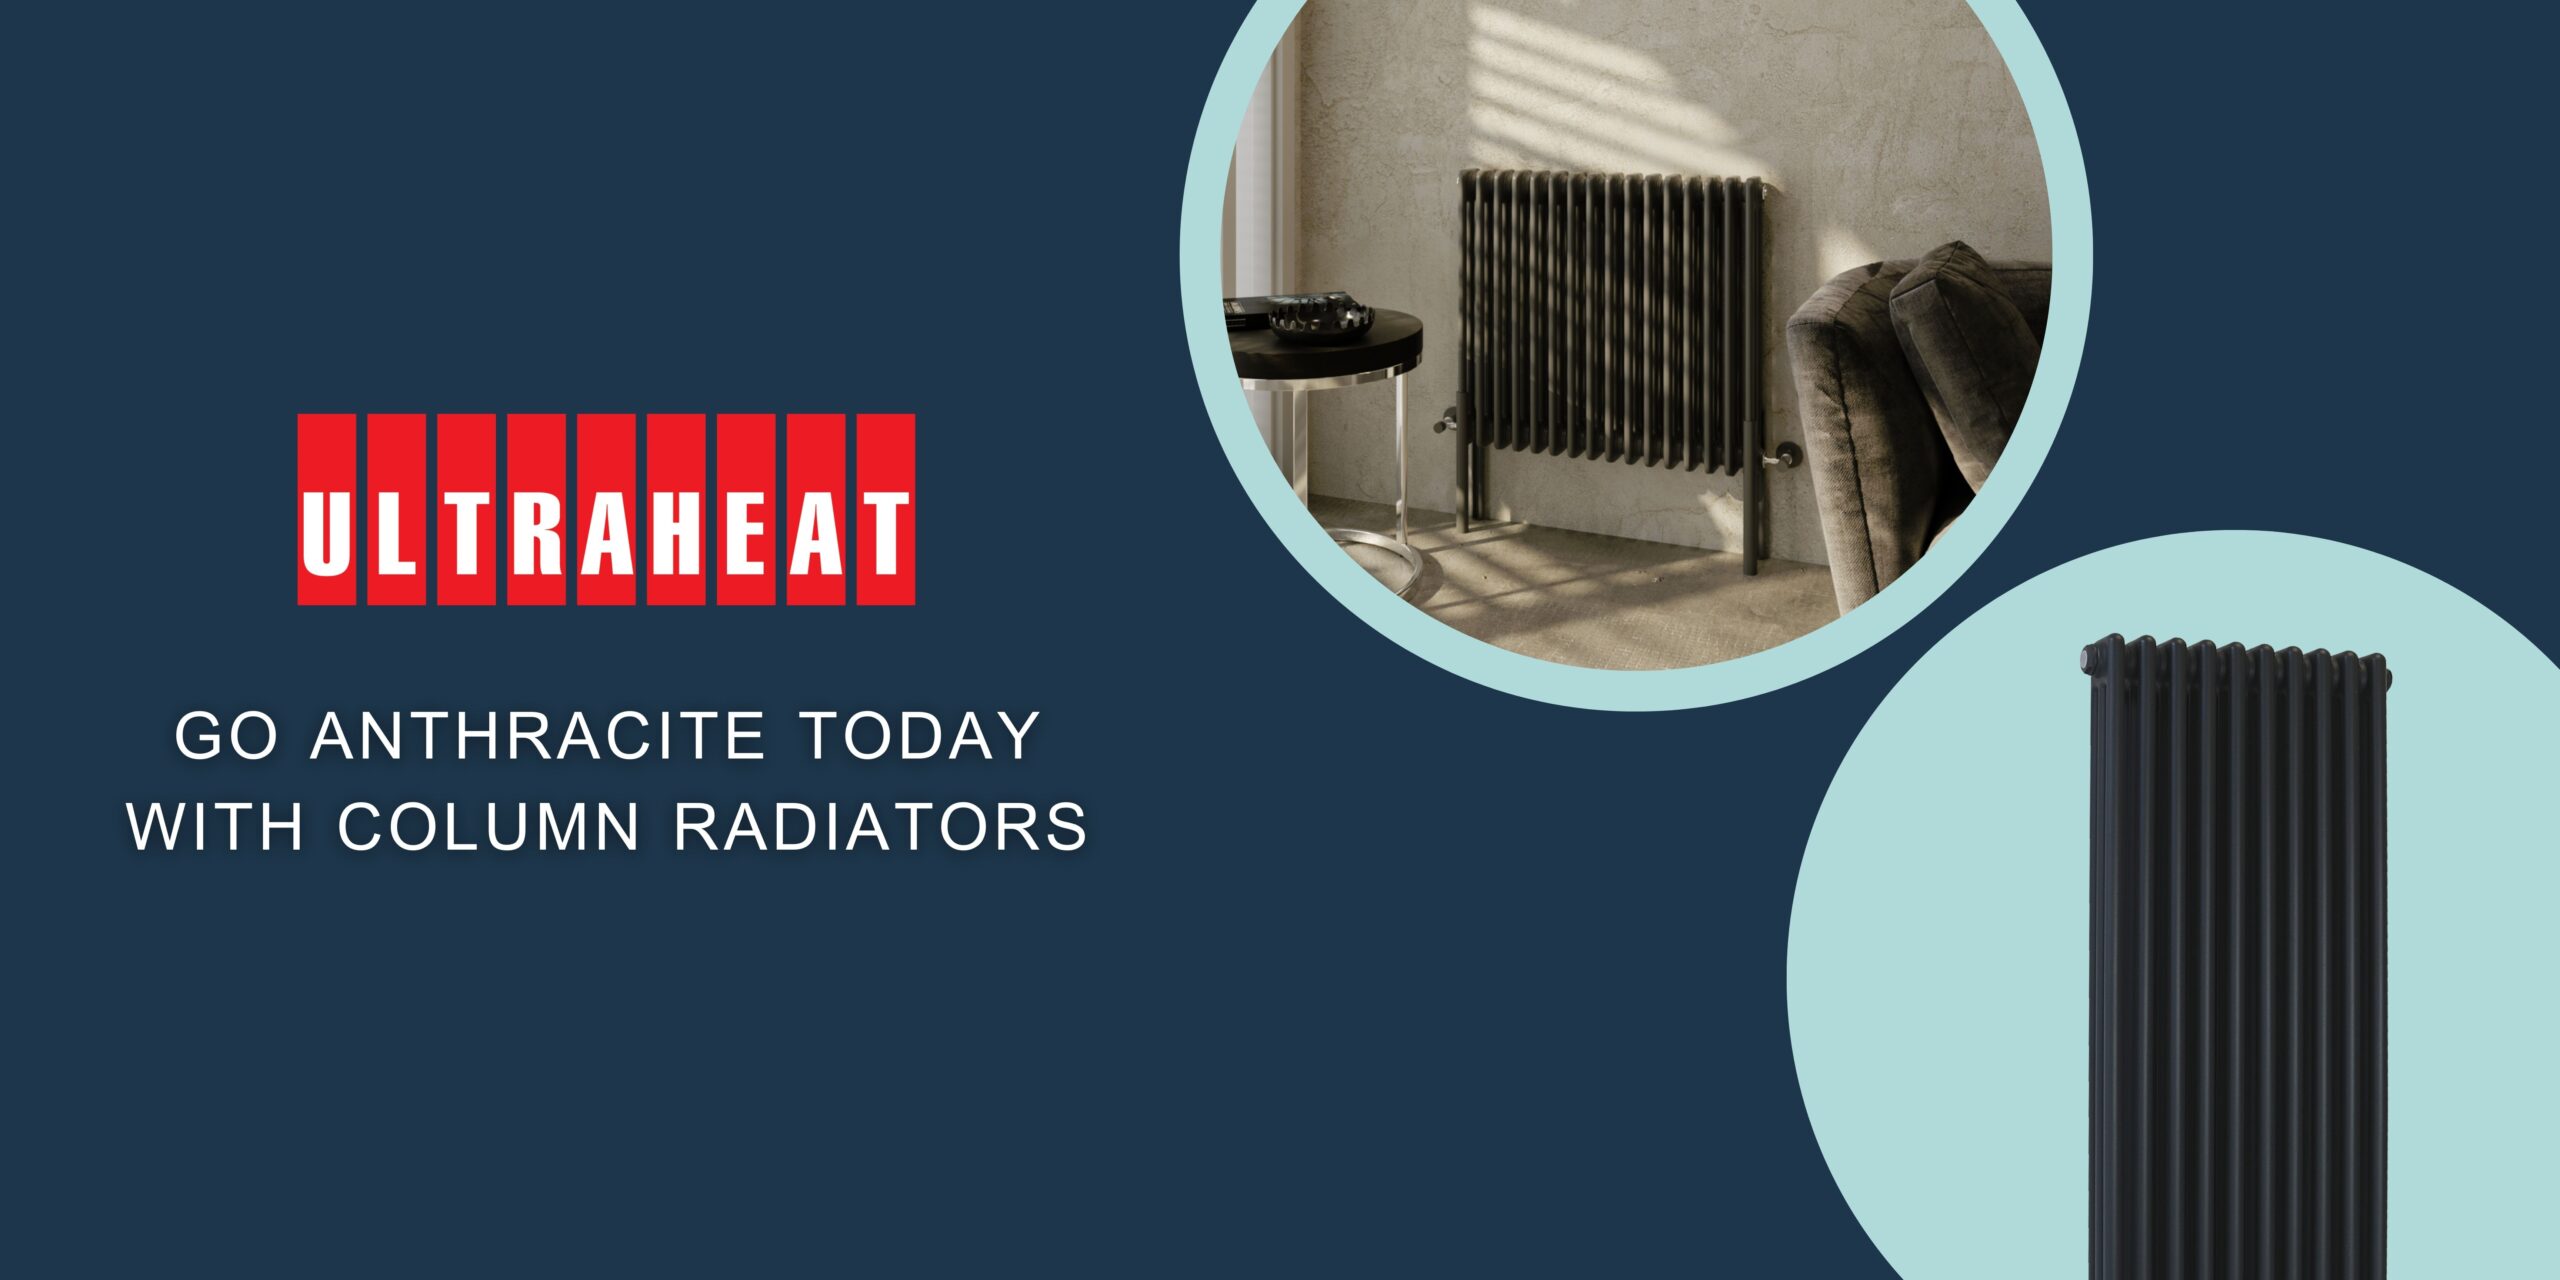 Go Anthracite Today with Ultraheat’s Column Radiators